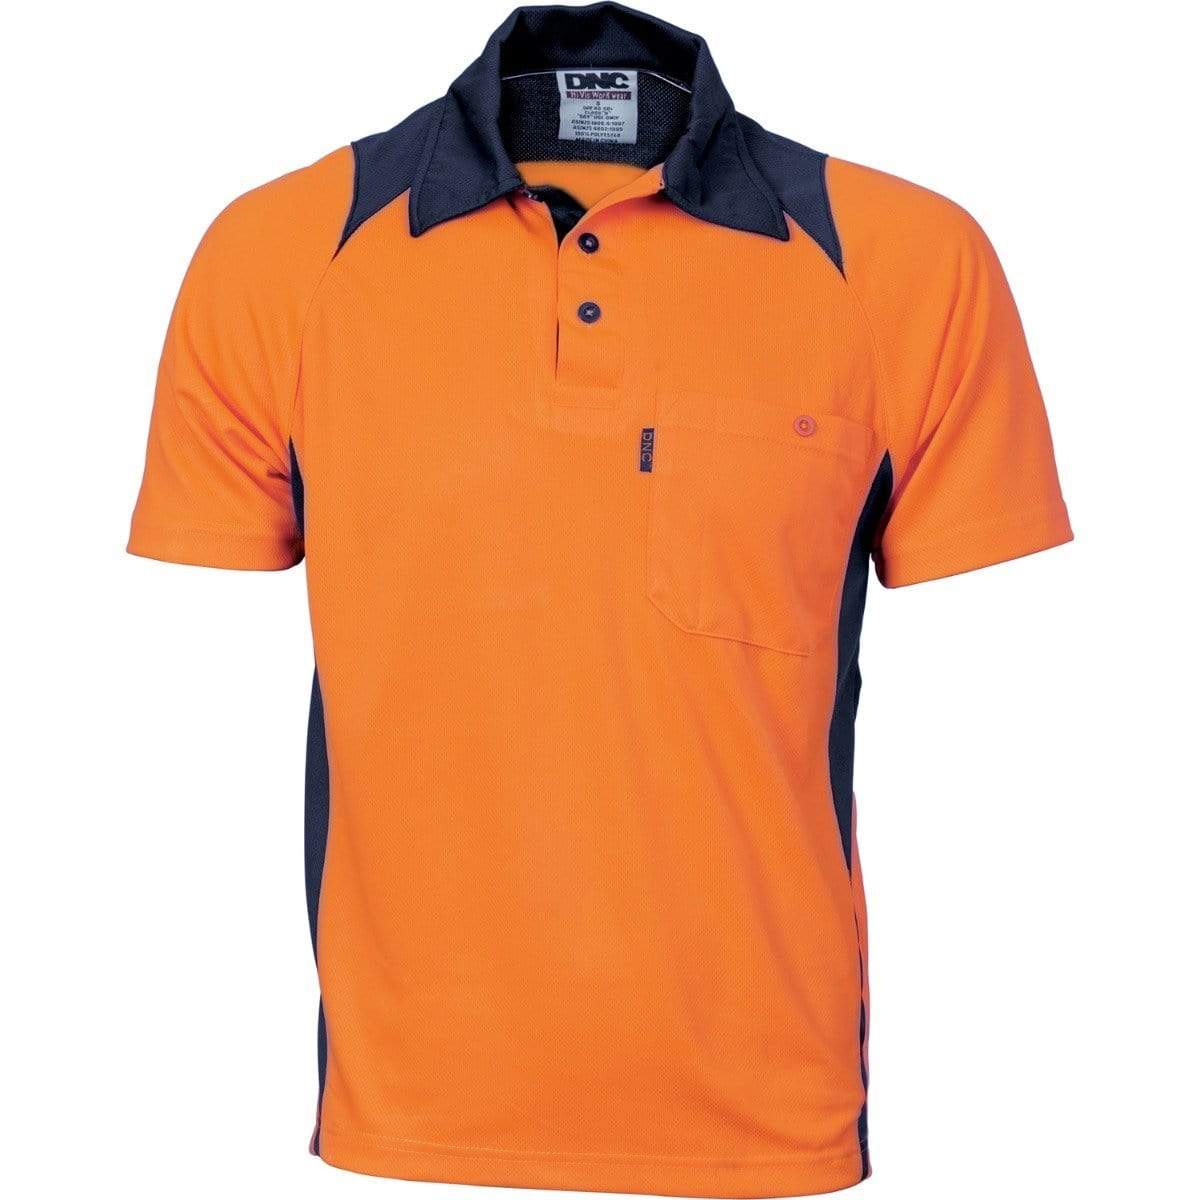 Dnc Workwear Cool Breathe Short Sleeve Action Polo Shirt - 3893 Work Wear DNC Workwear Orange/Navy XS 